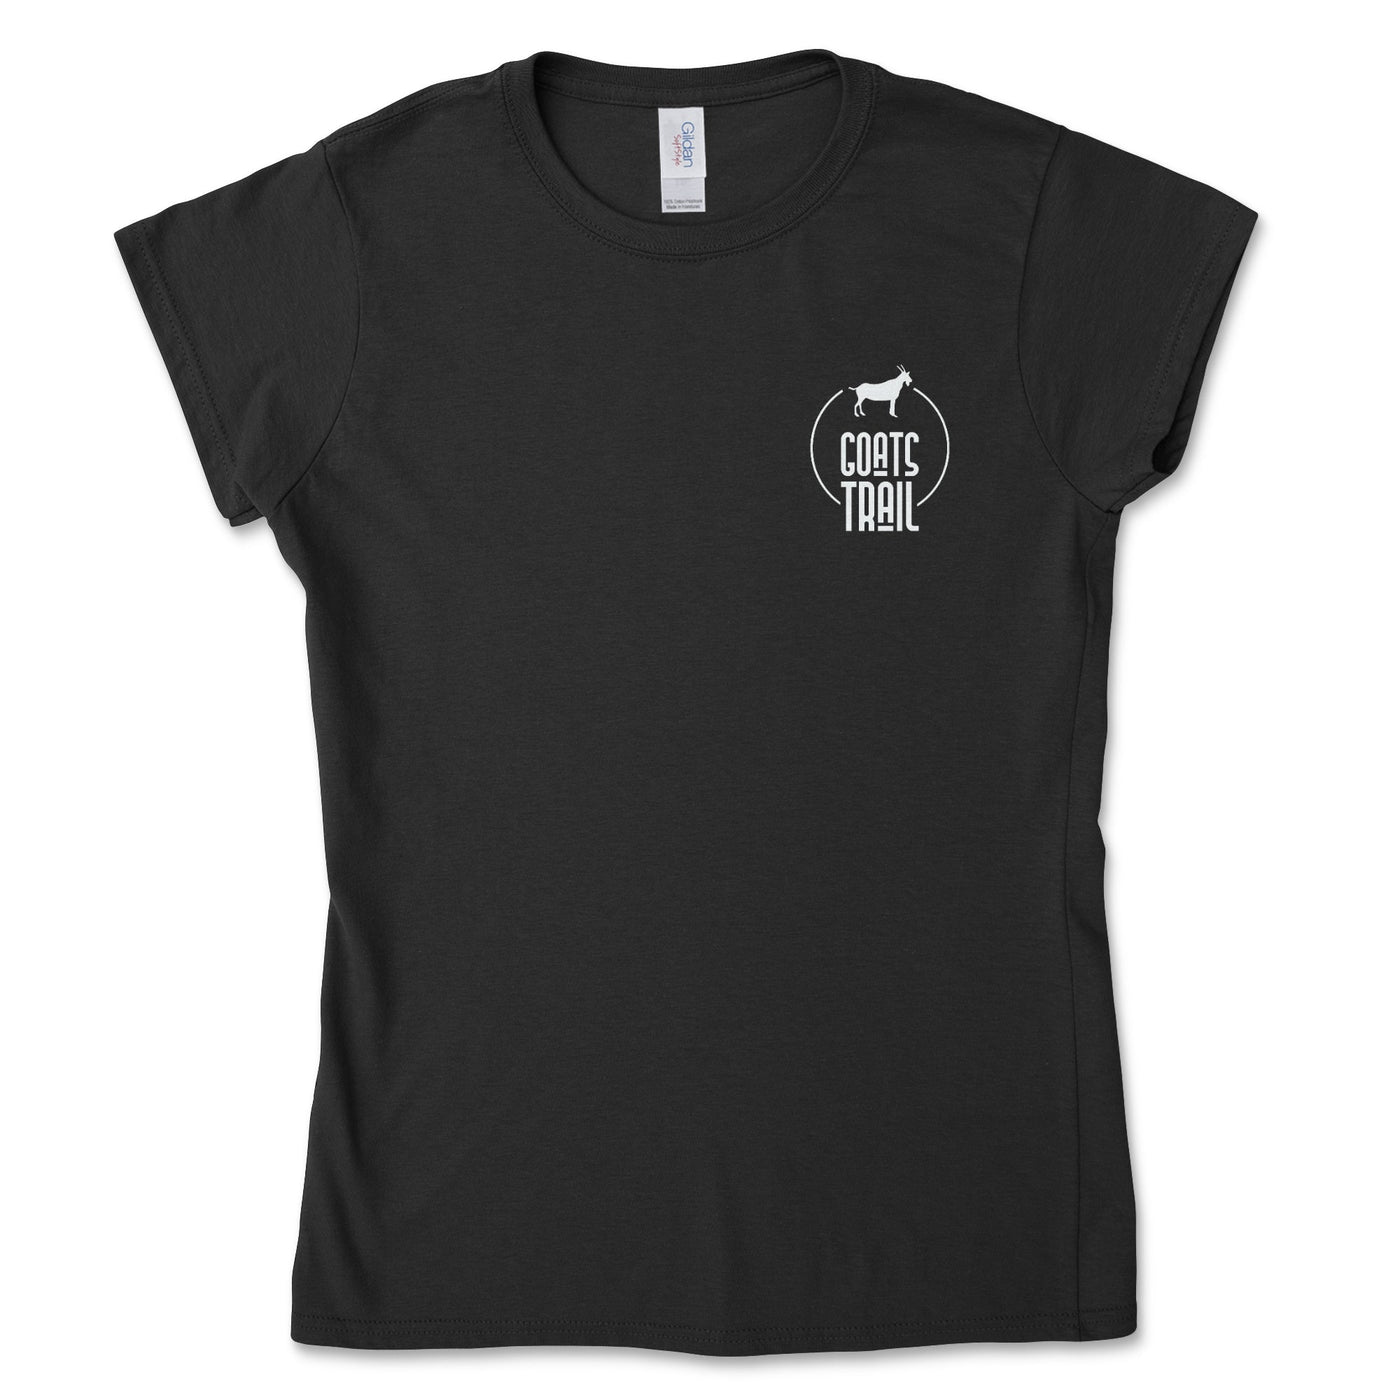 Women's Outdoor Adventure Club Shirt - Goats Trail Off-Road Apparel Company